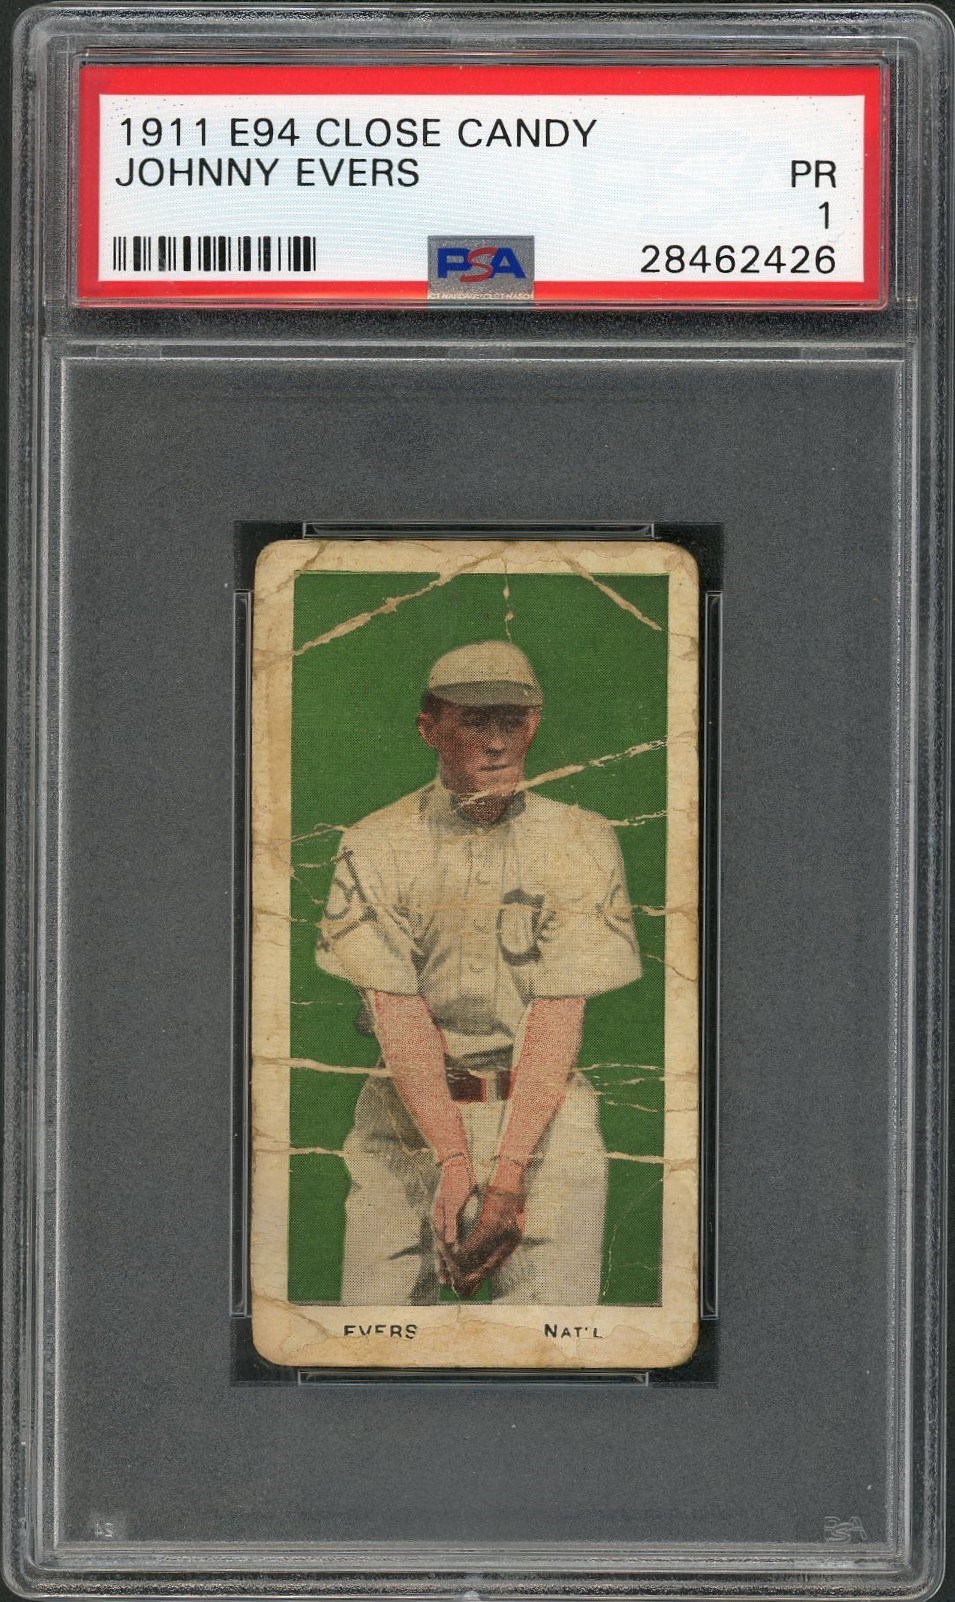 Baseball and Trading Cards - 1911 E94 Close Candy Johnny Evers - PSA PR 1